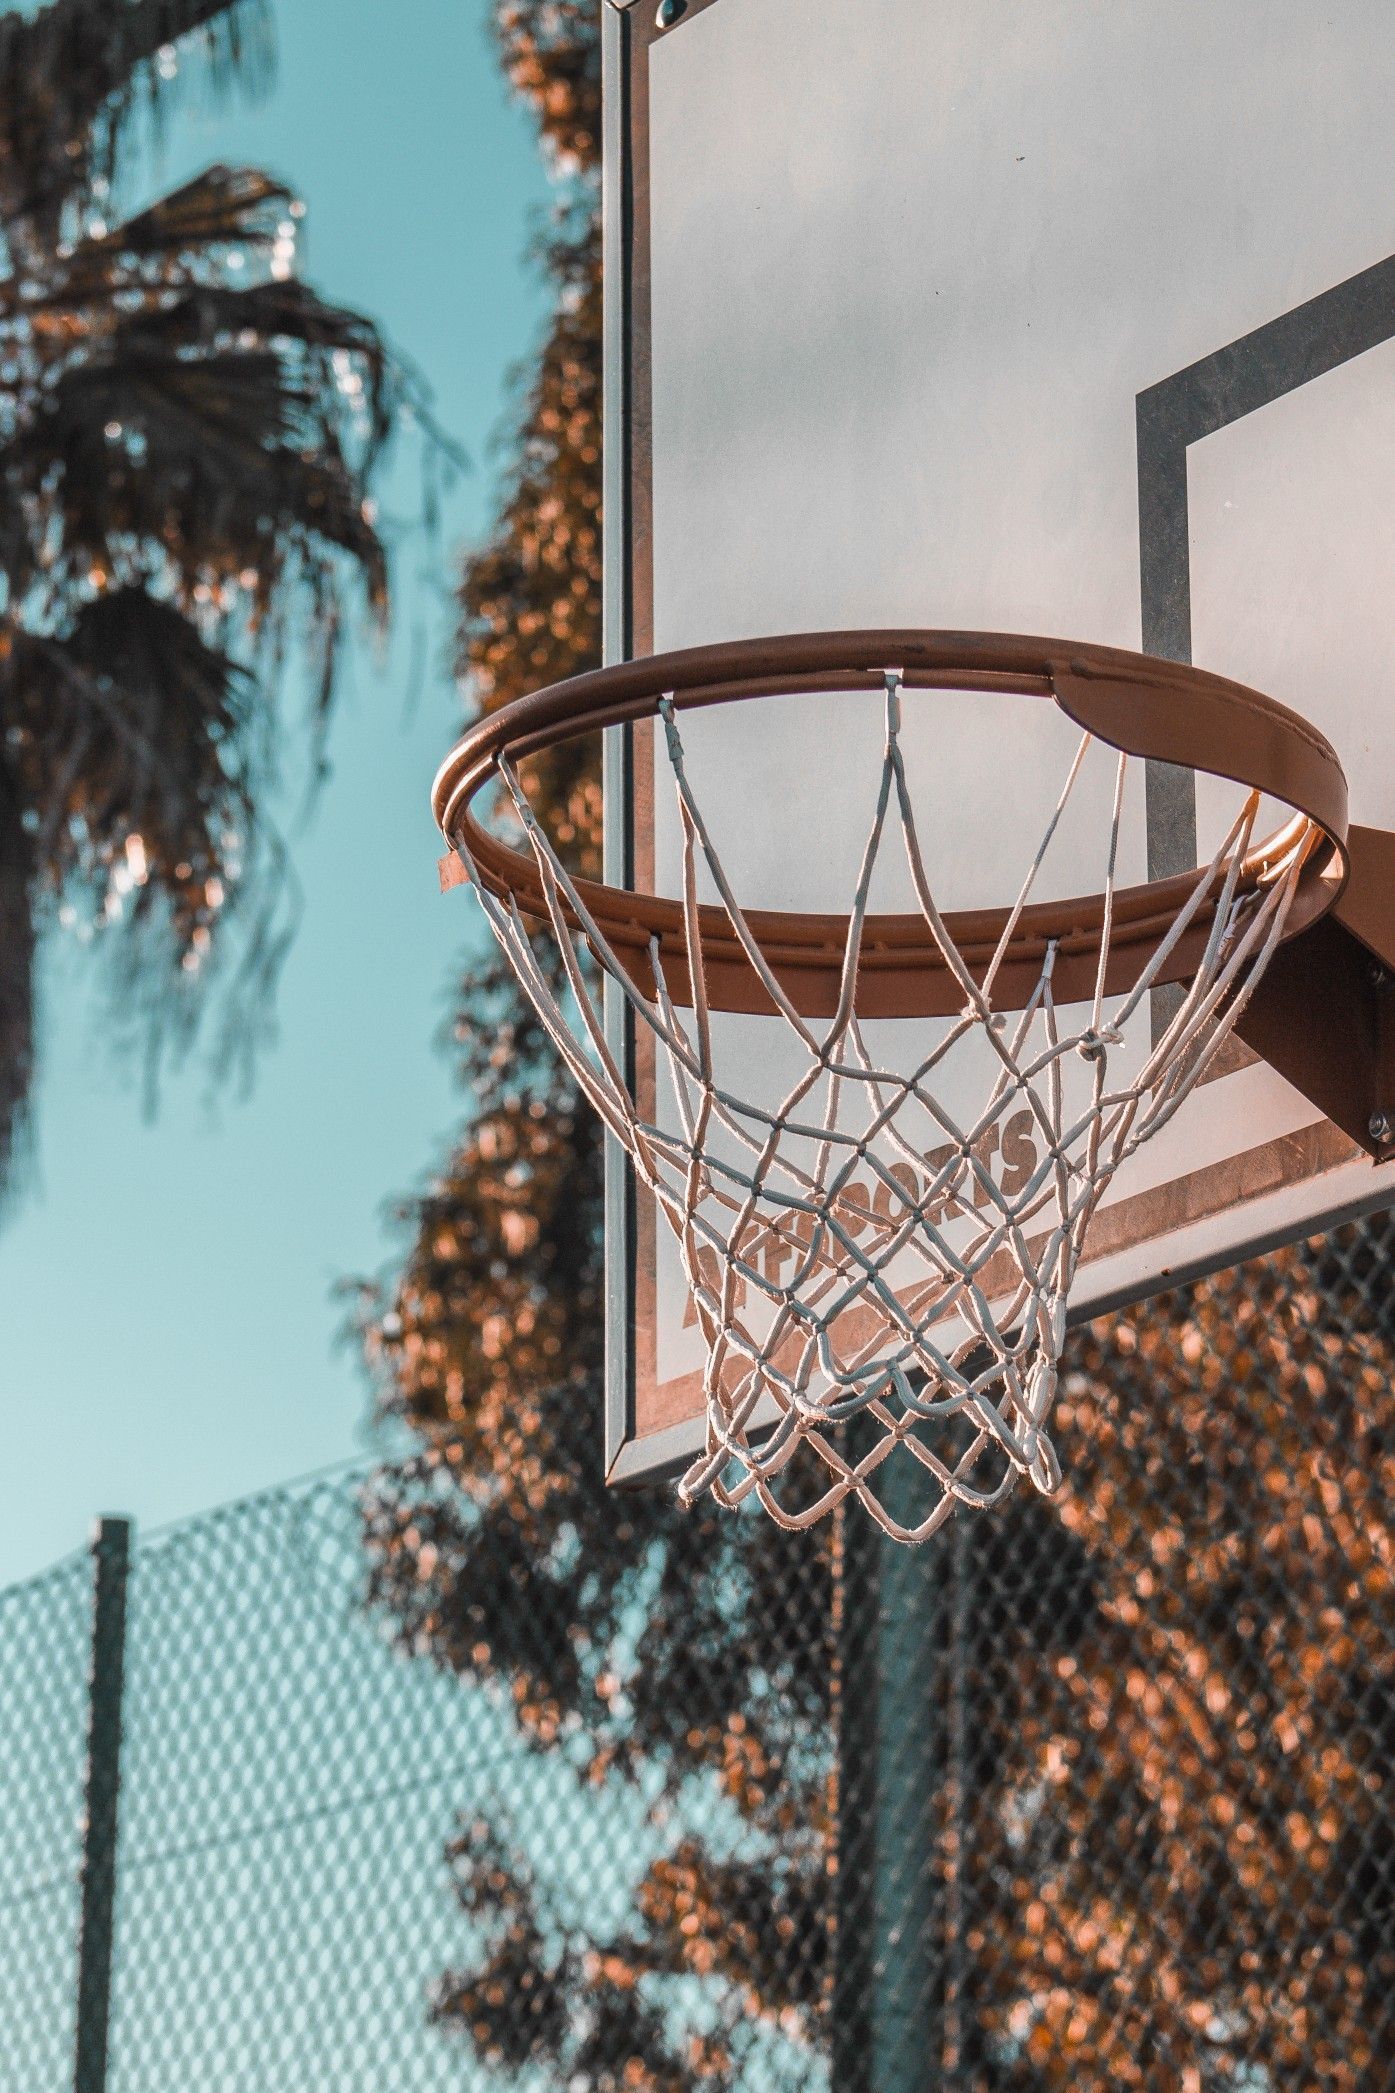 A basketball hoop with the net open - Basketball